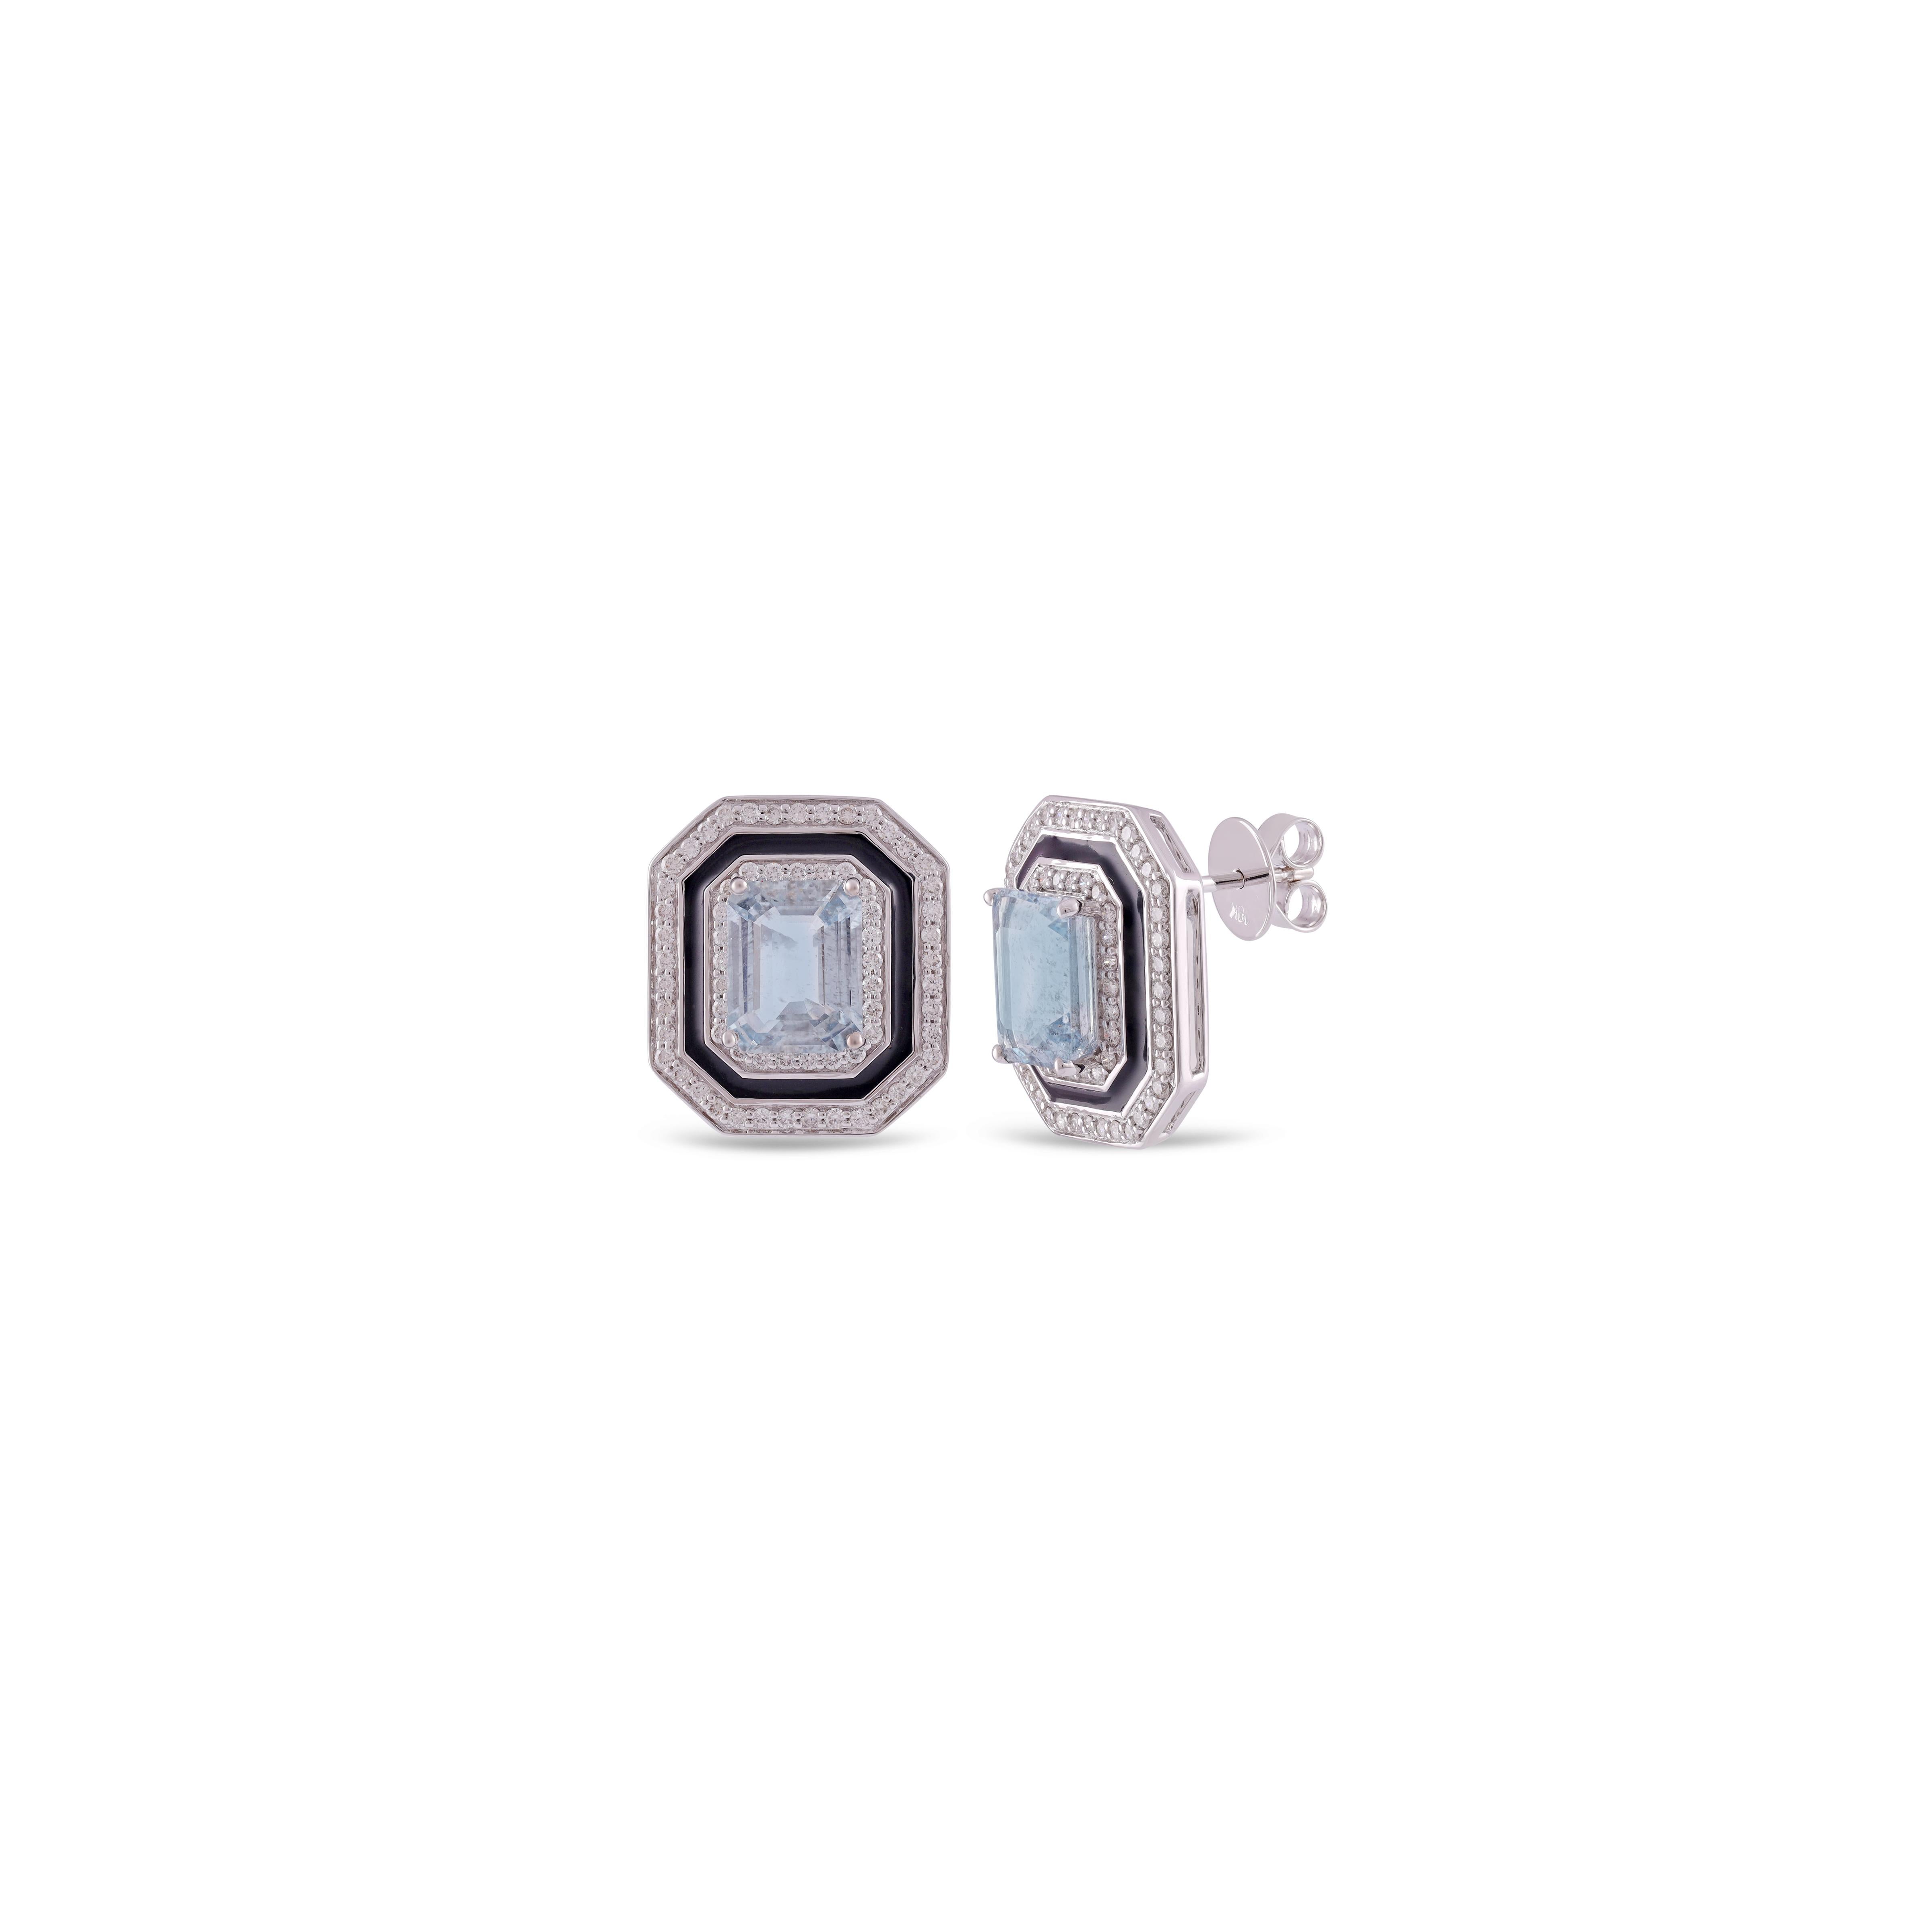 Emerald Cut 5.03 Carat Clear Aquamarine & Enamel Earring Studs in 18k White Gold